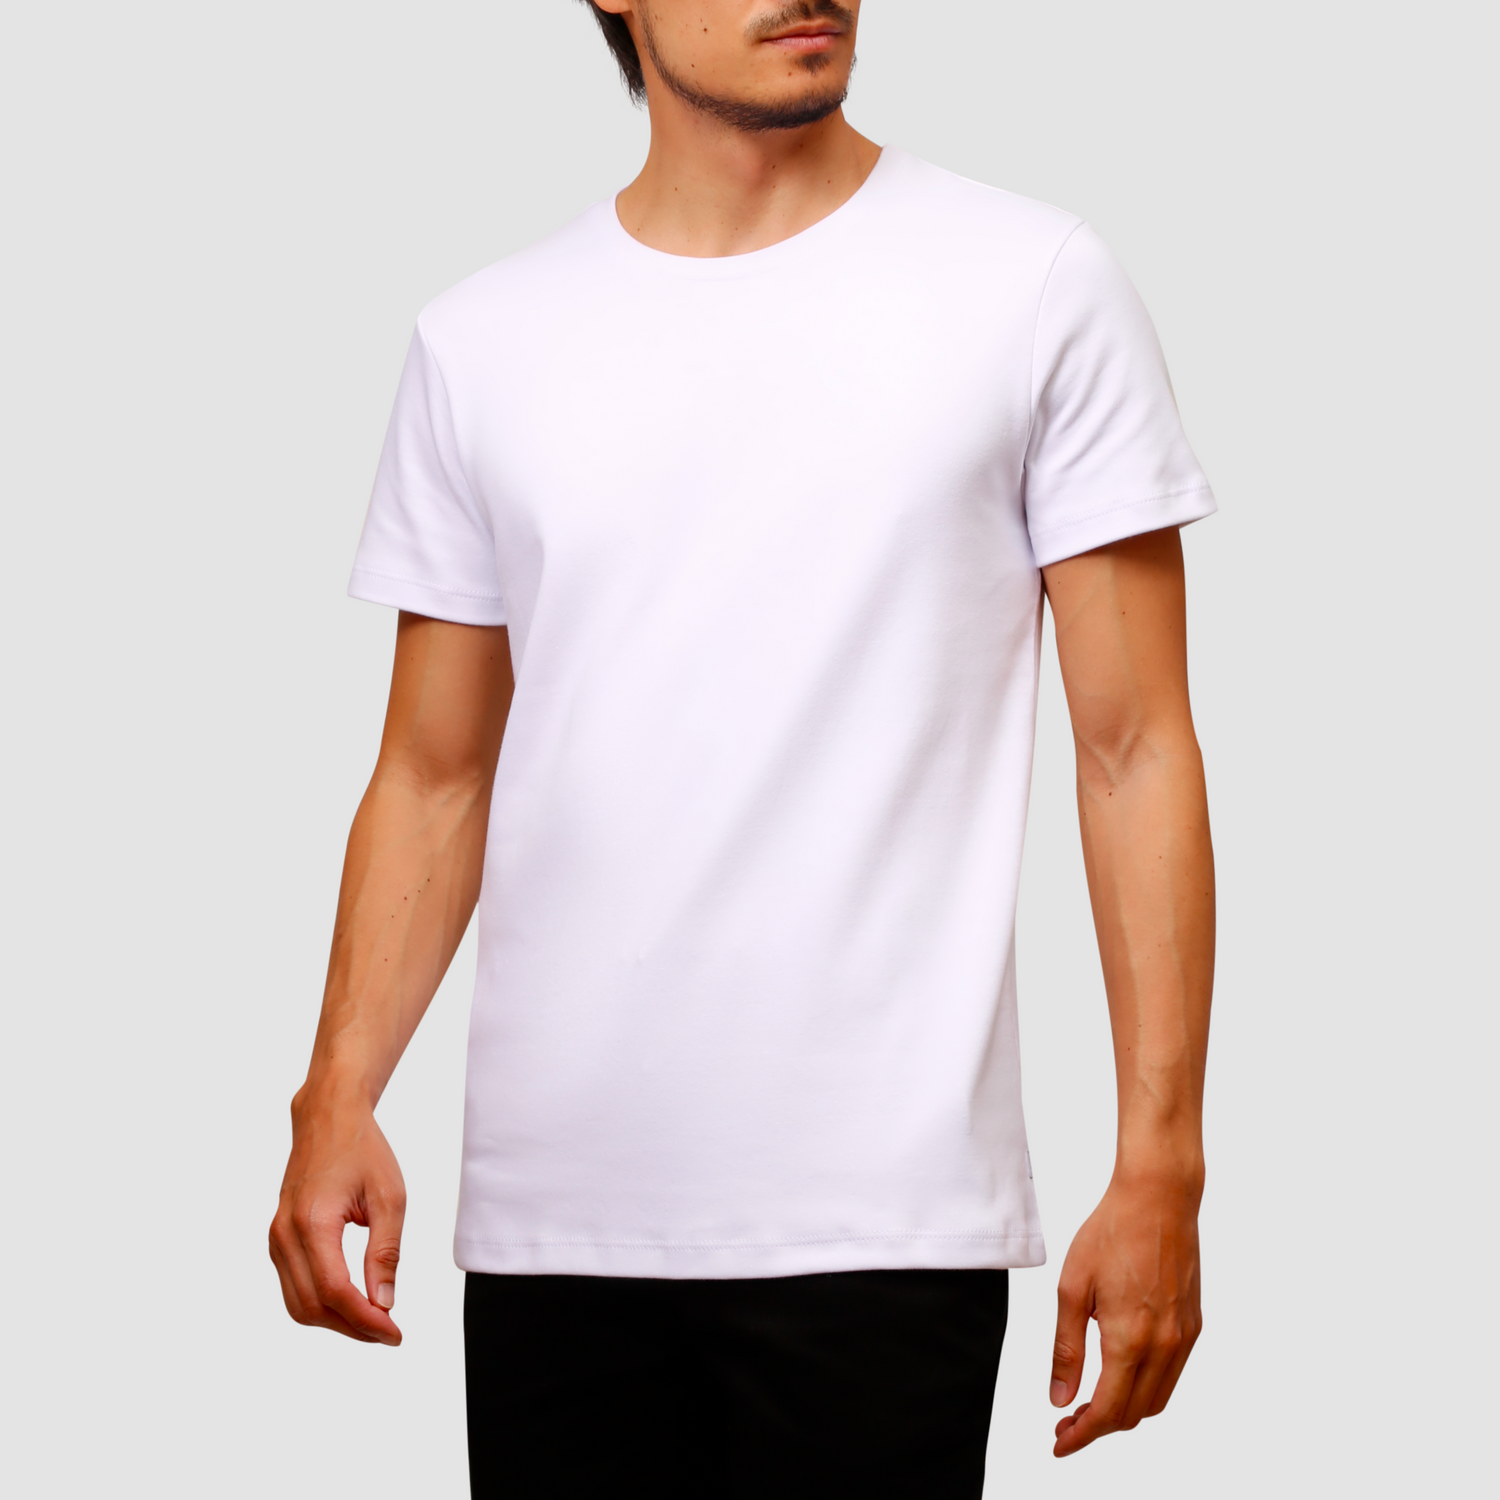 ORIBA | Camiseta Malha Dupla Gola C Branca 45o